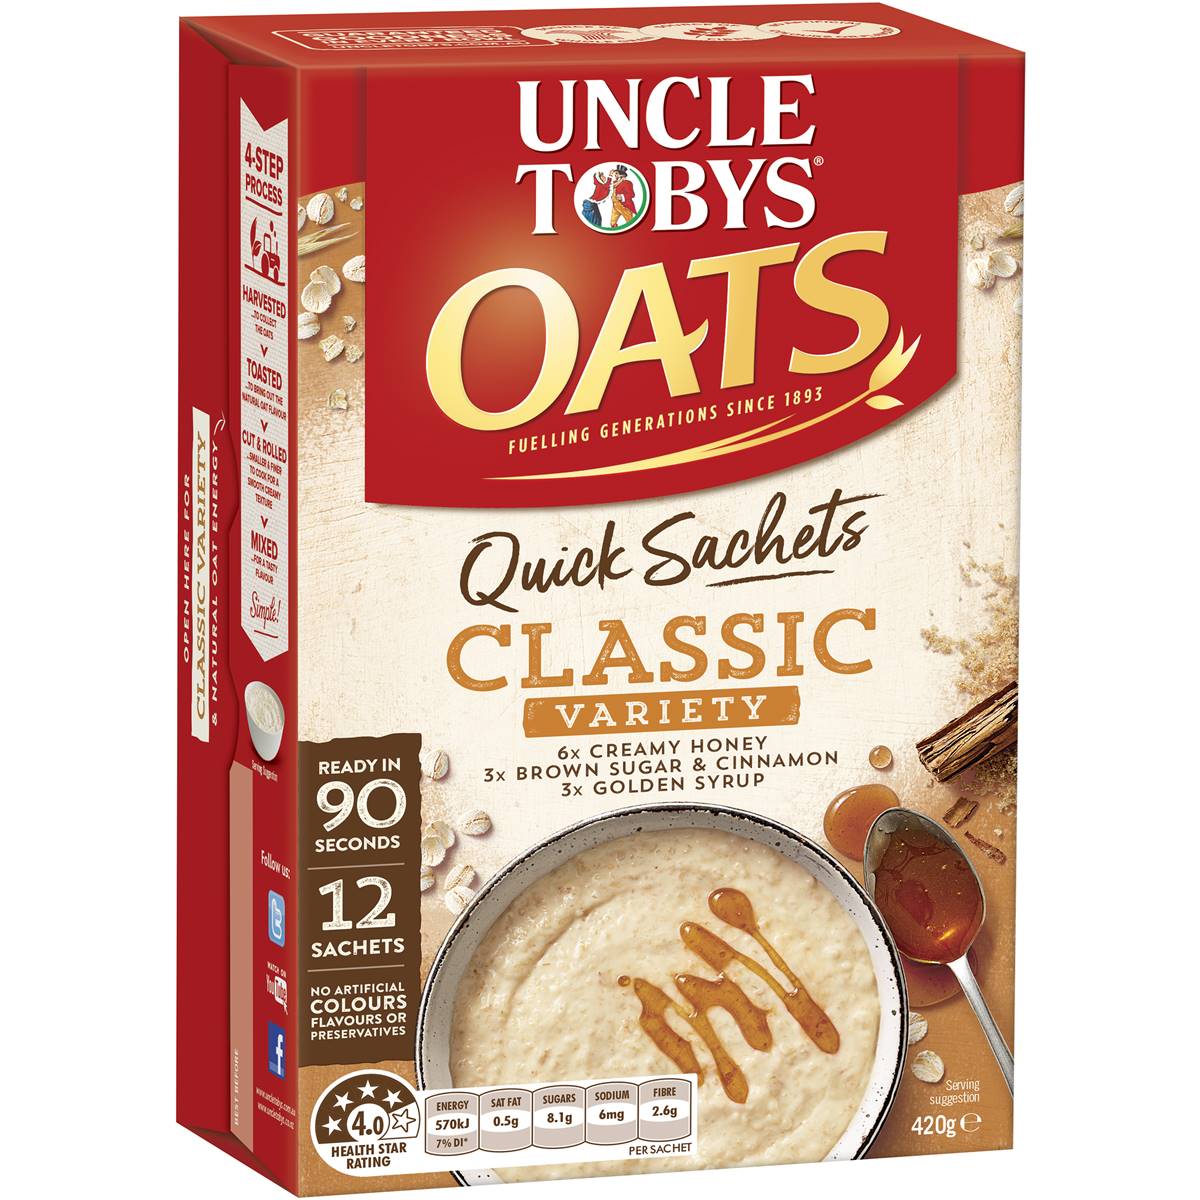 Uncle Tobys Oats Quick Sachets Classics Variety Porridge